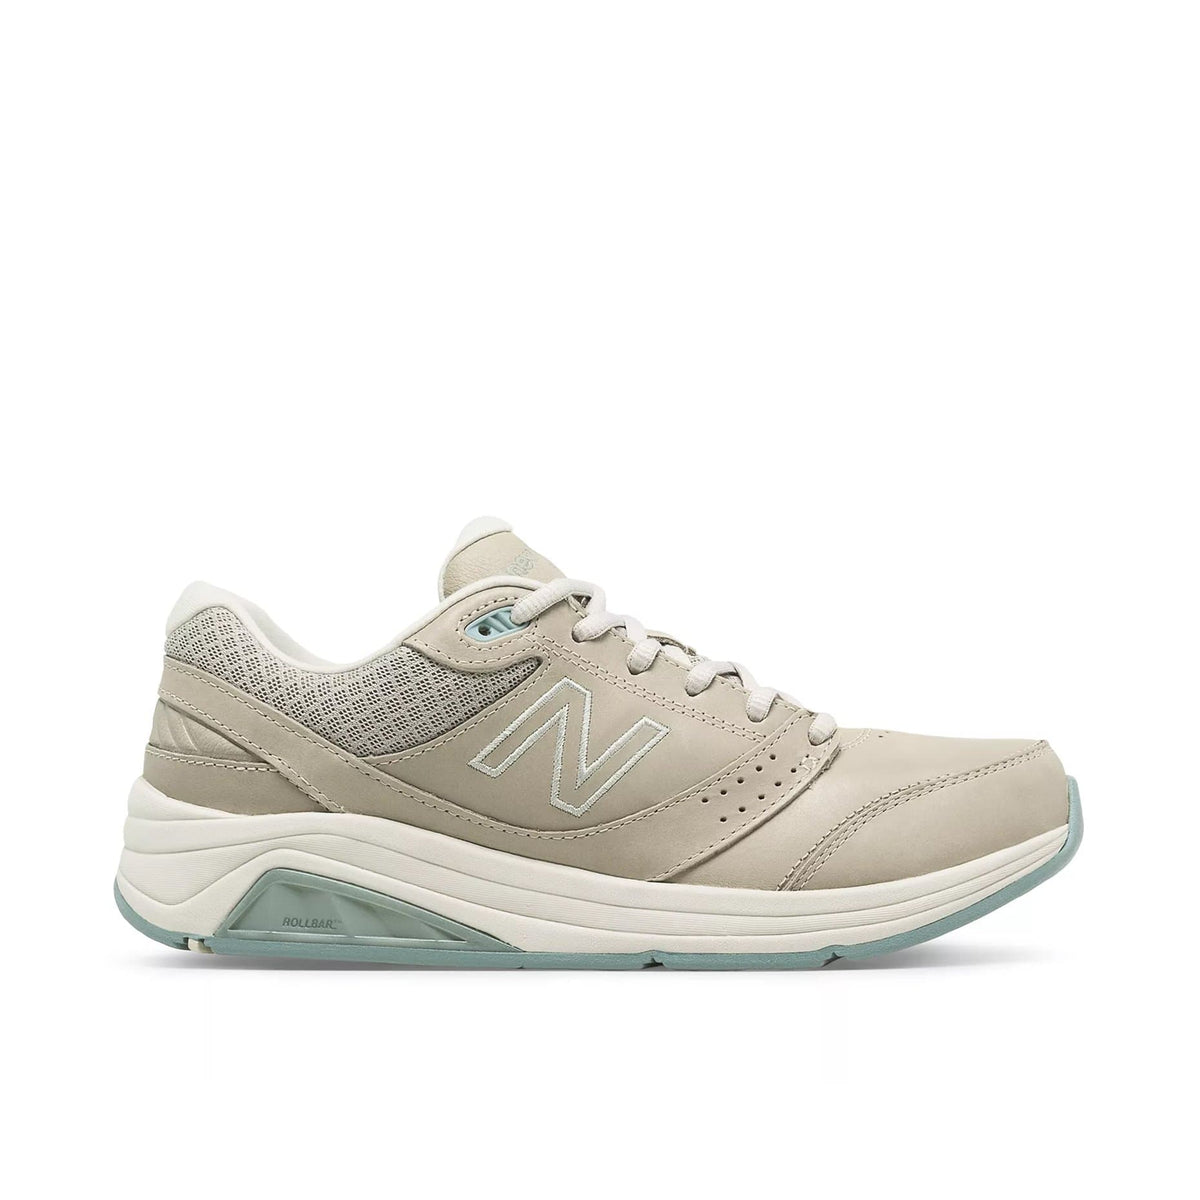 New Balance Womens 928v3 Walking Shoes - Grey